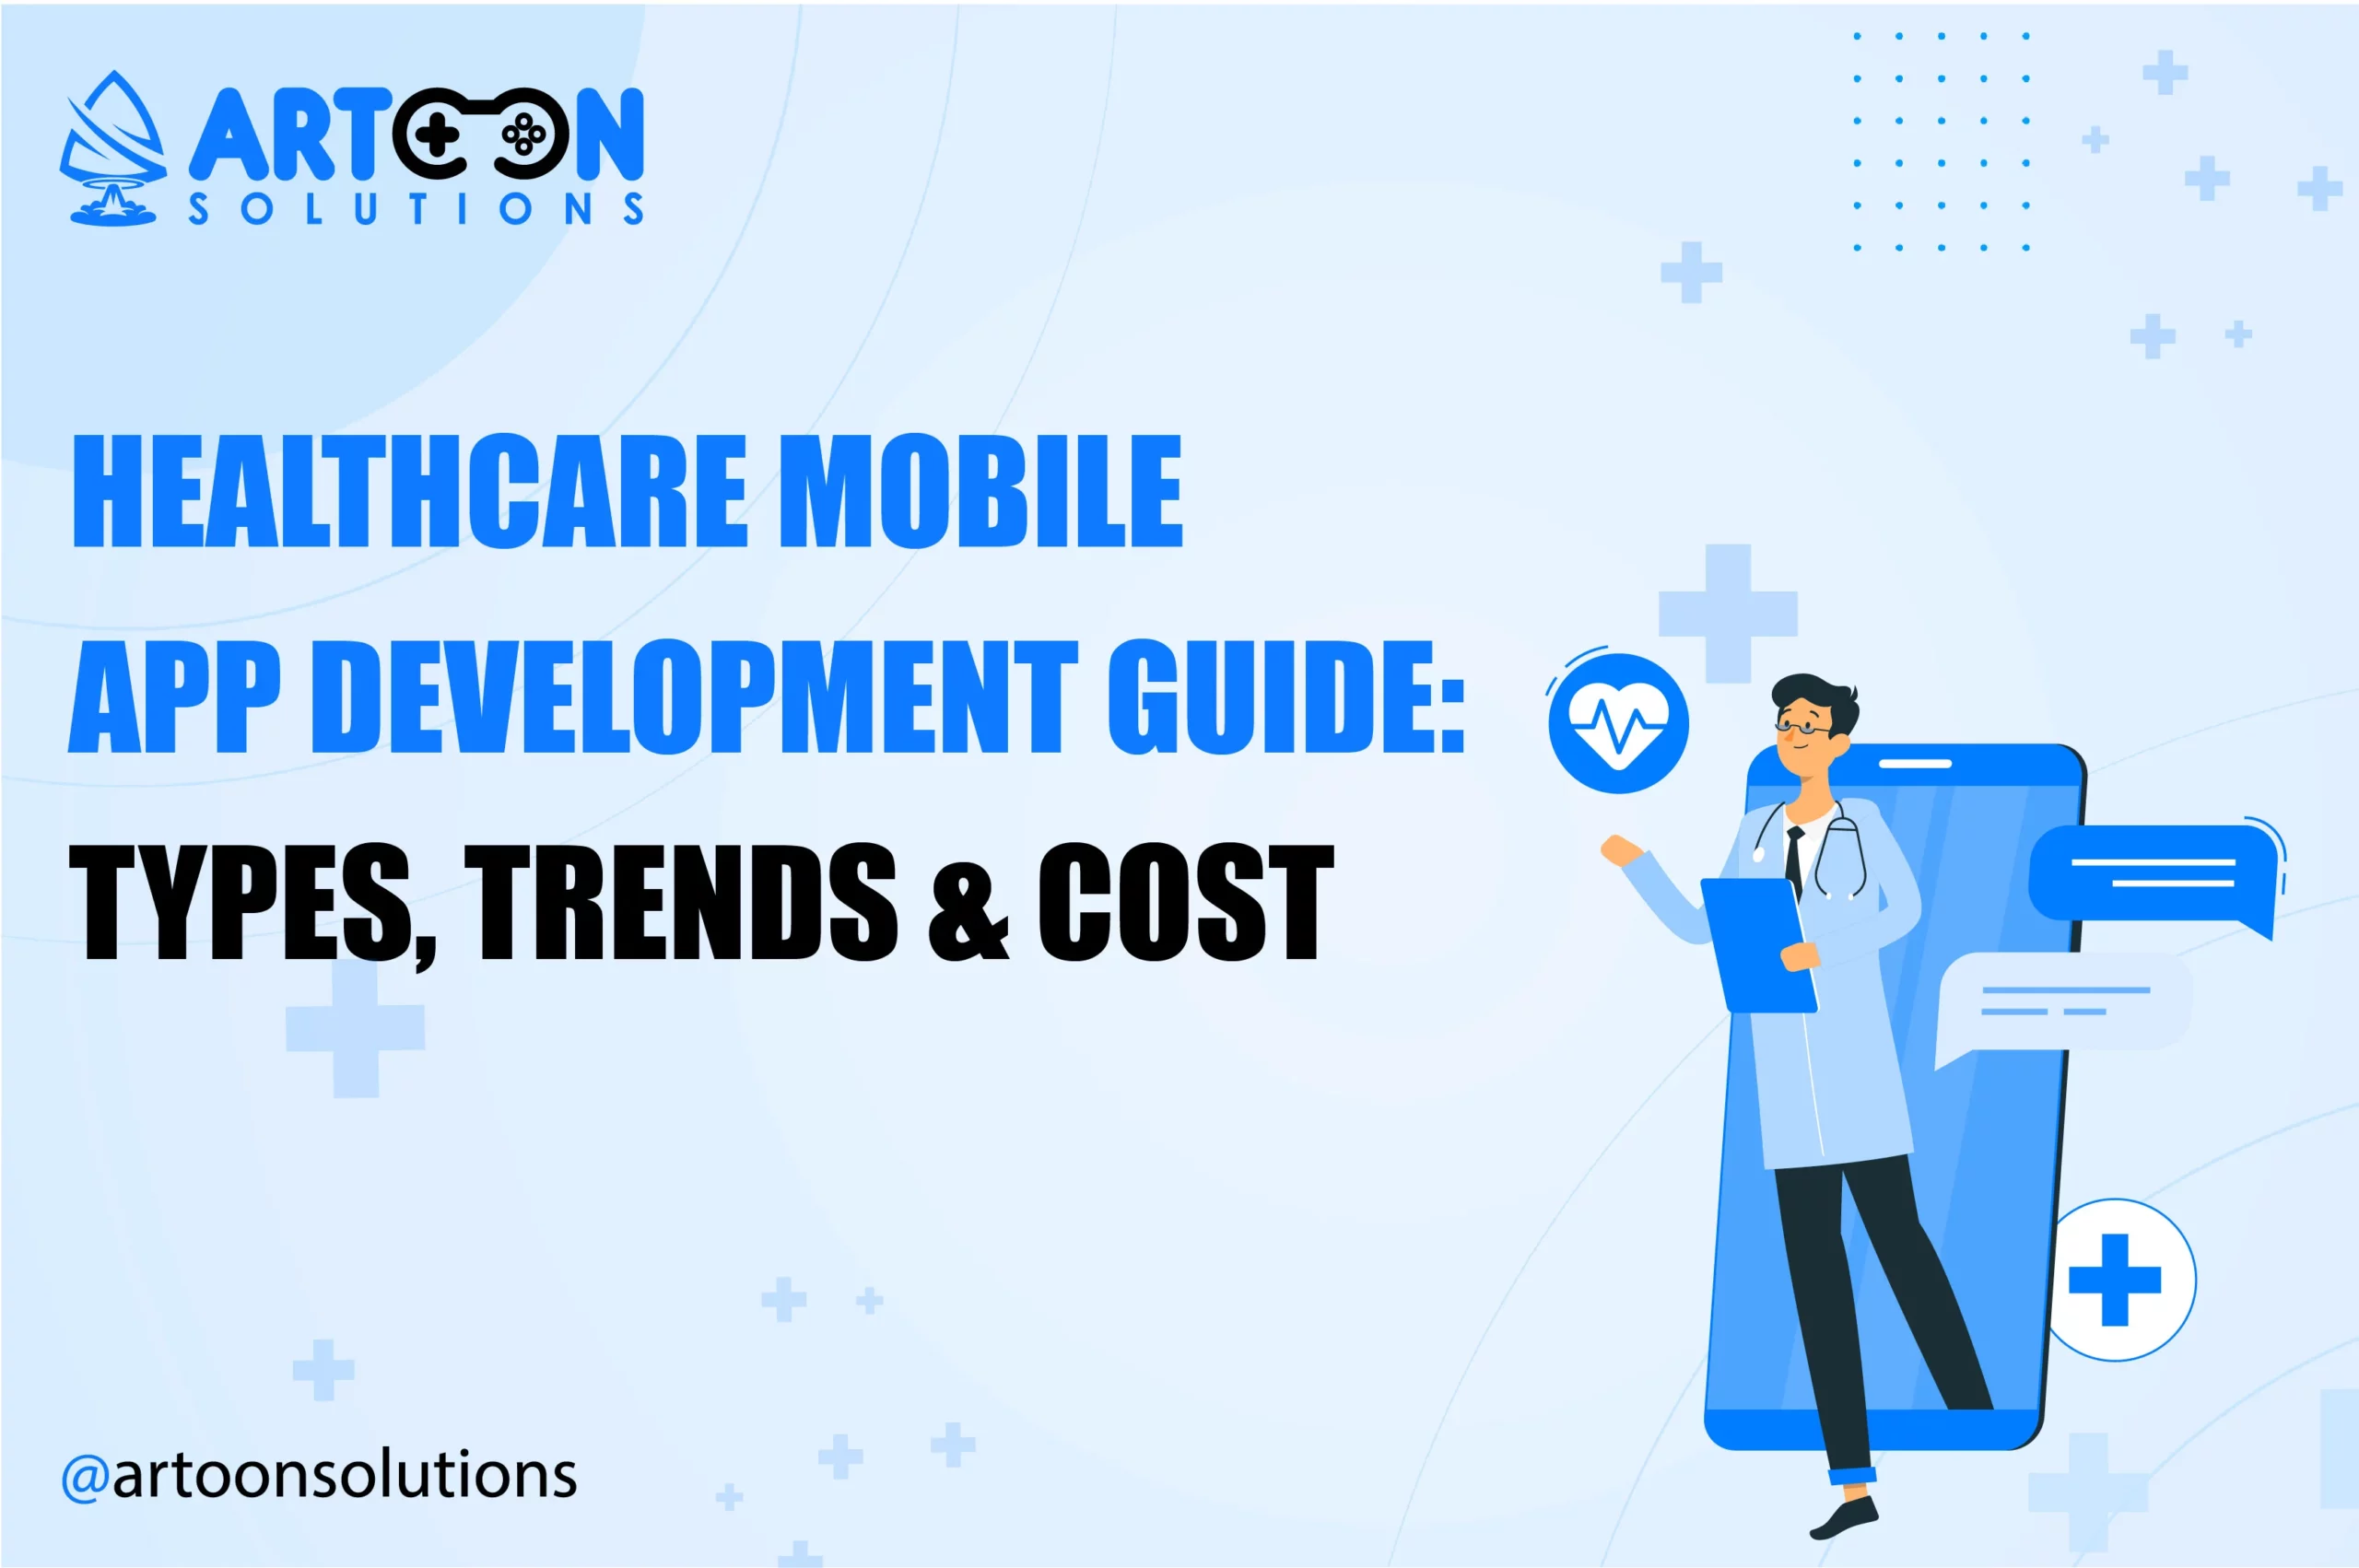 Healthcare Mobile App Development